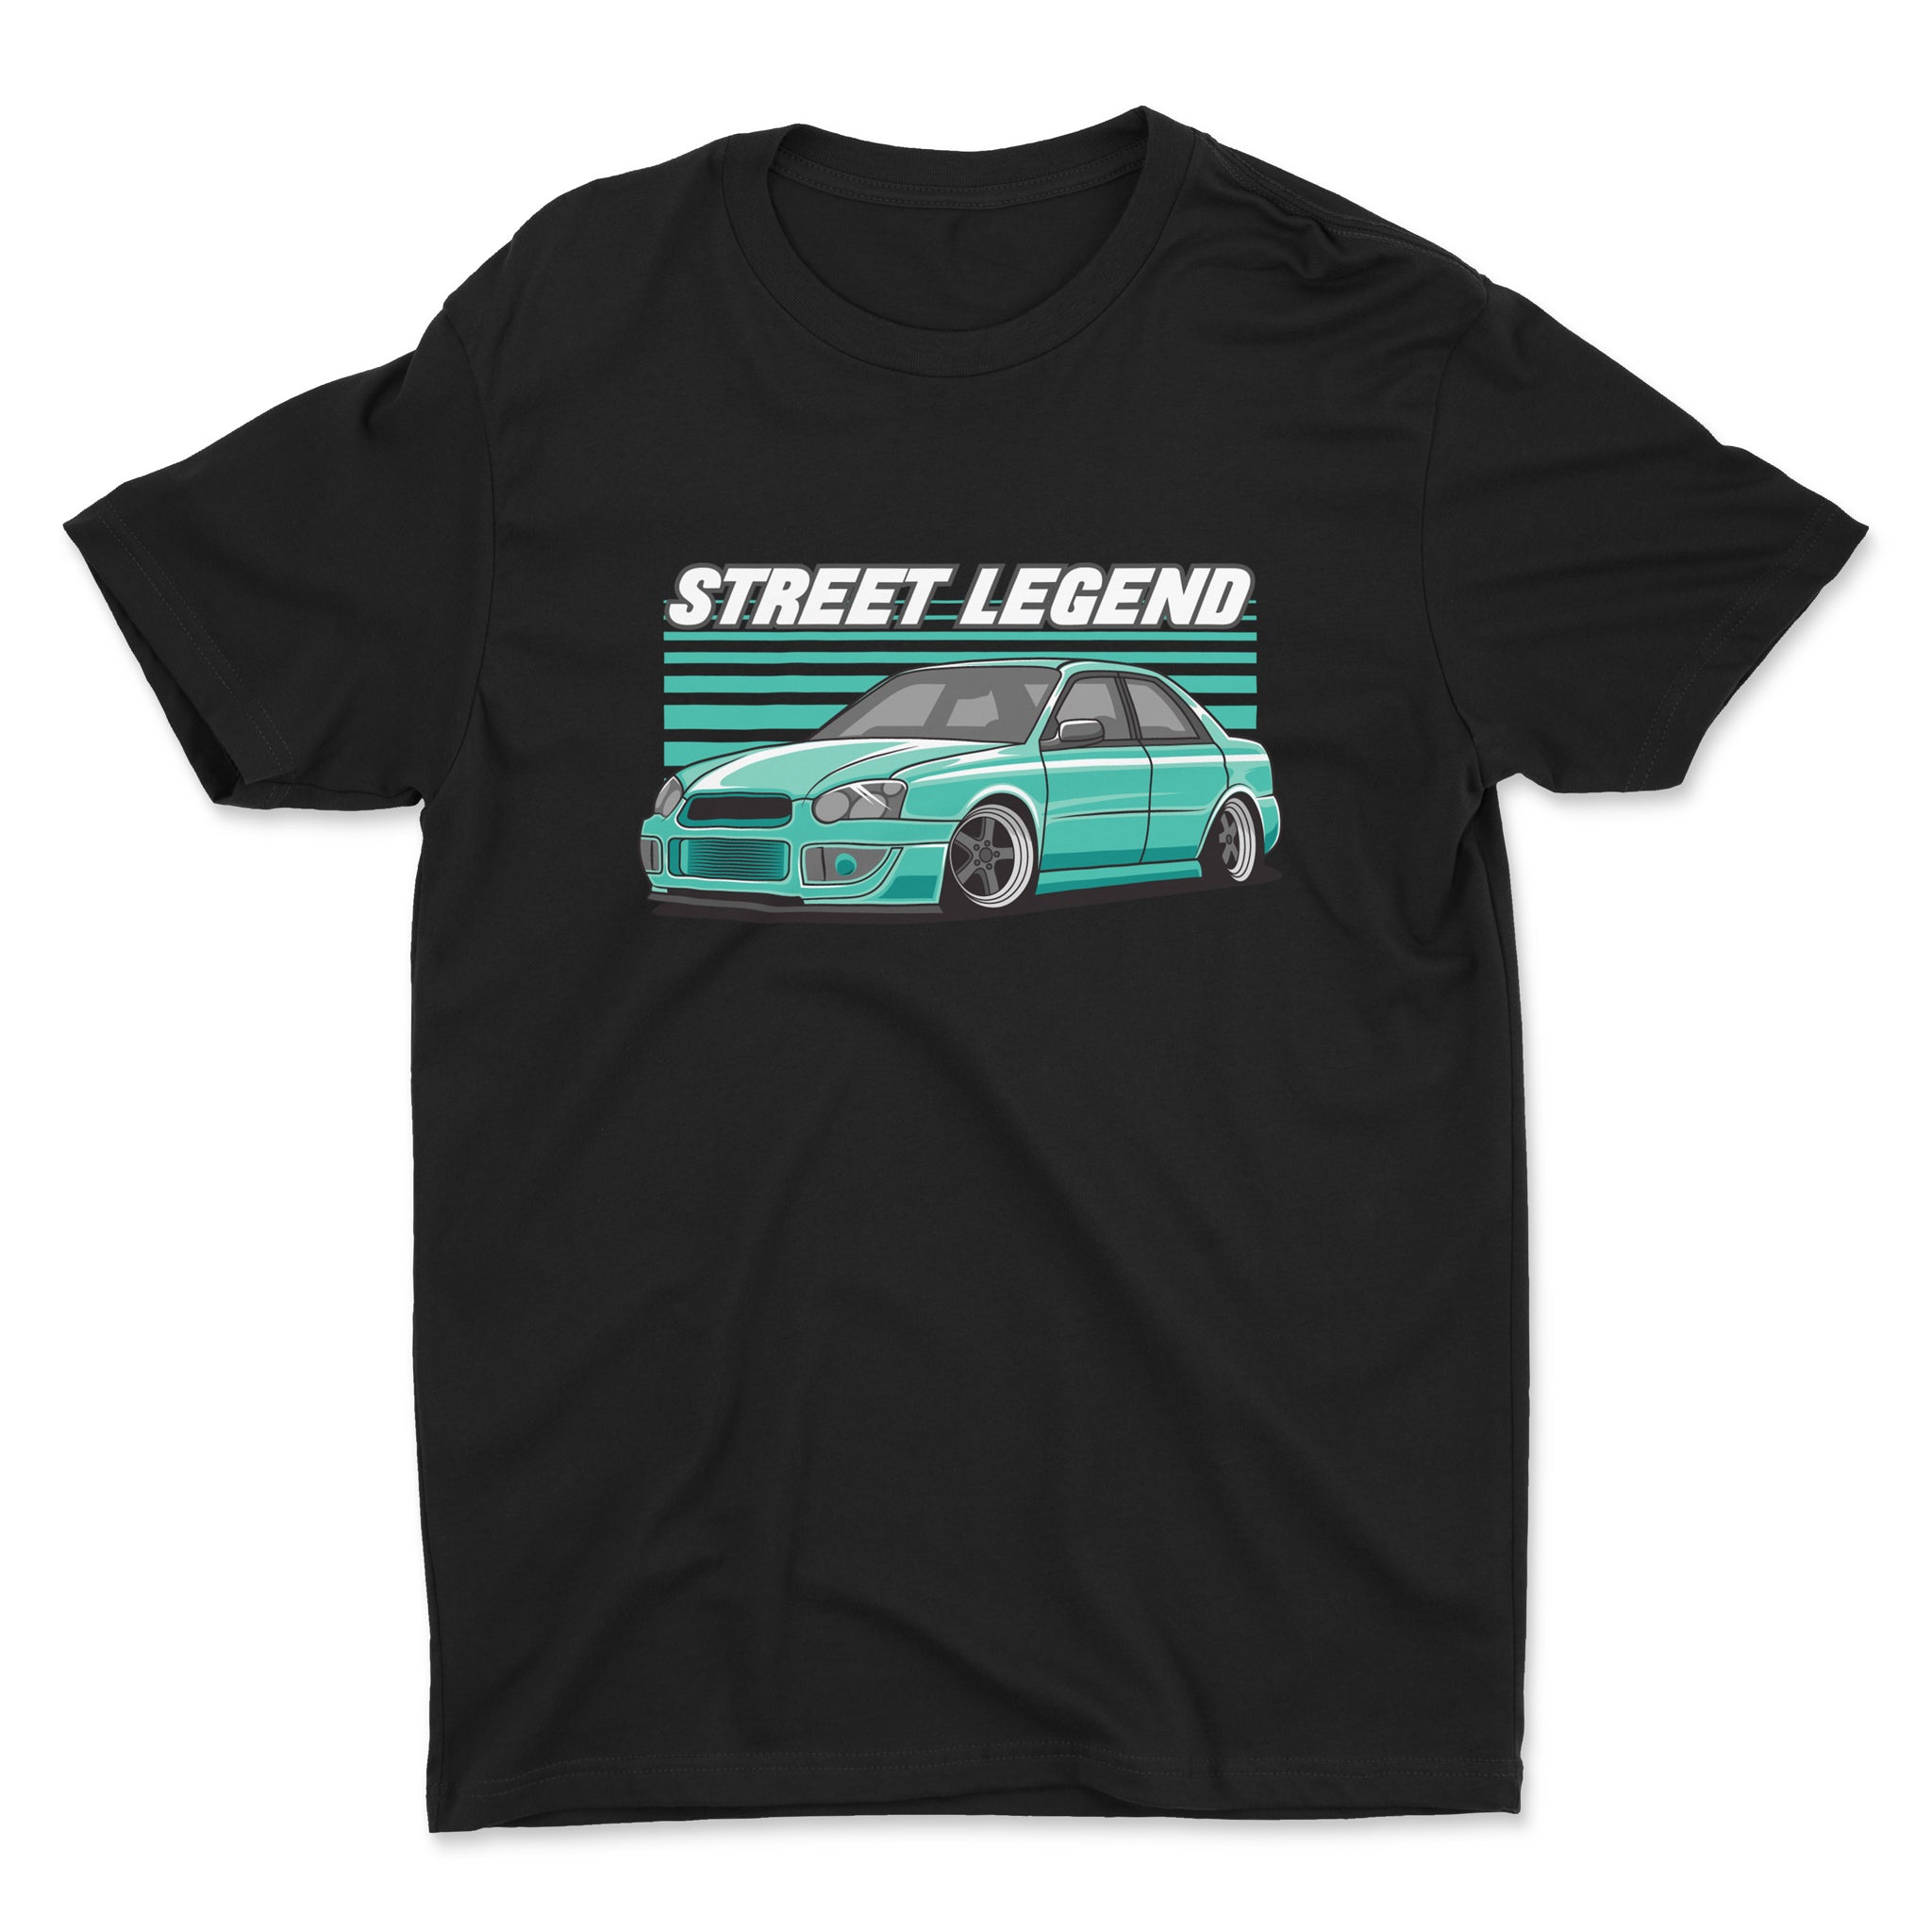 Street Legend - Car T-Shirt - Black.